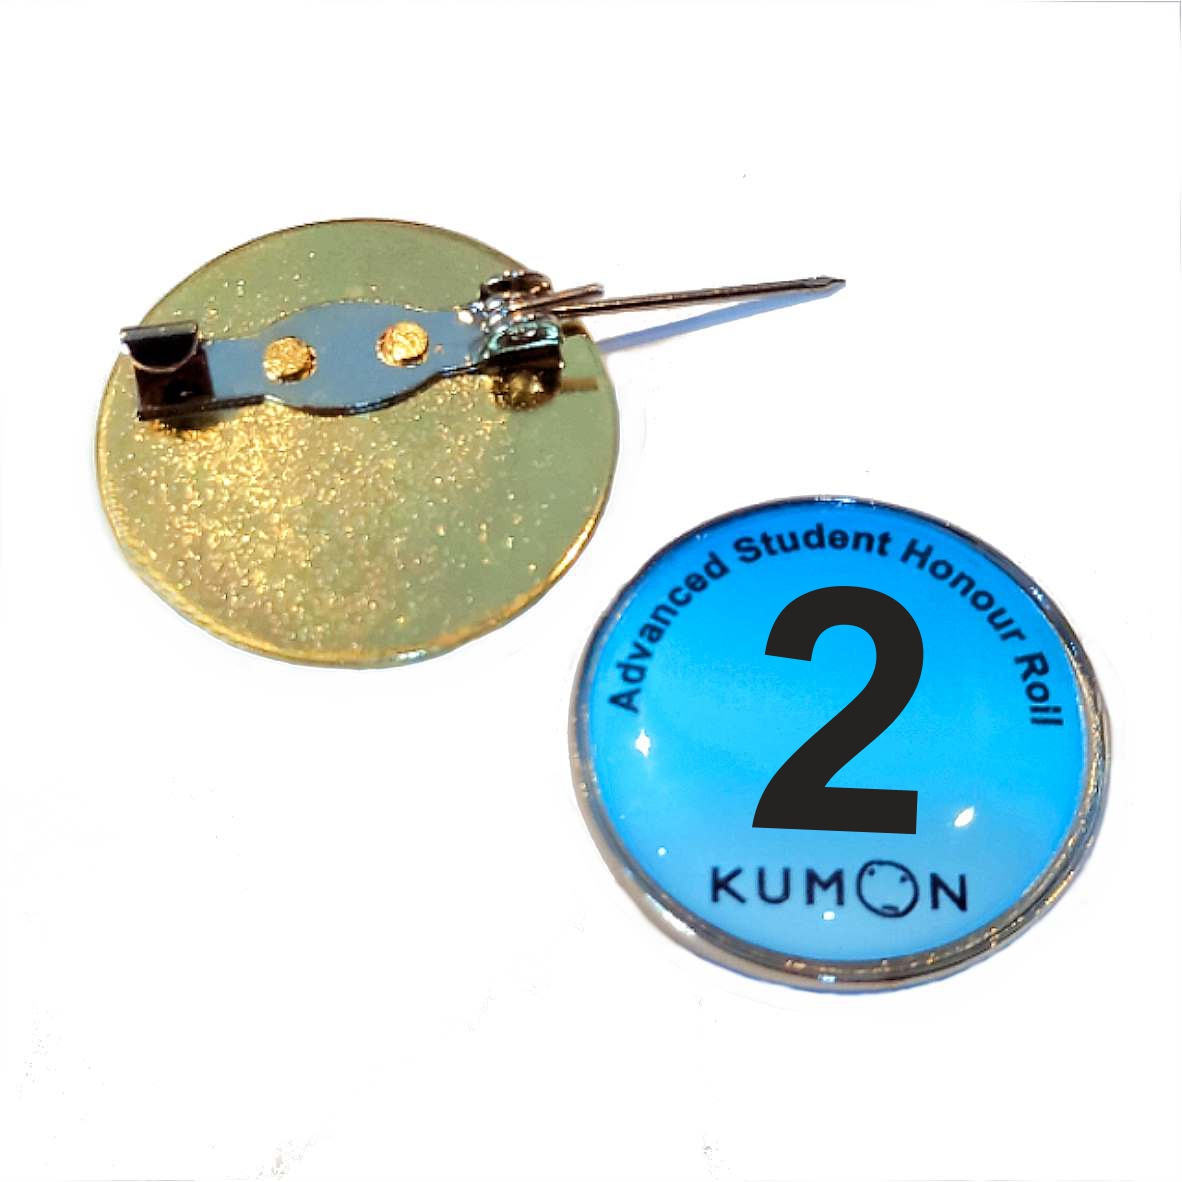 KUMON Advanced Student 2 blue 27mm Round